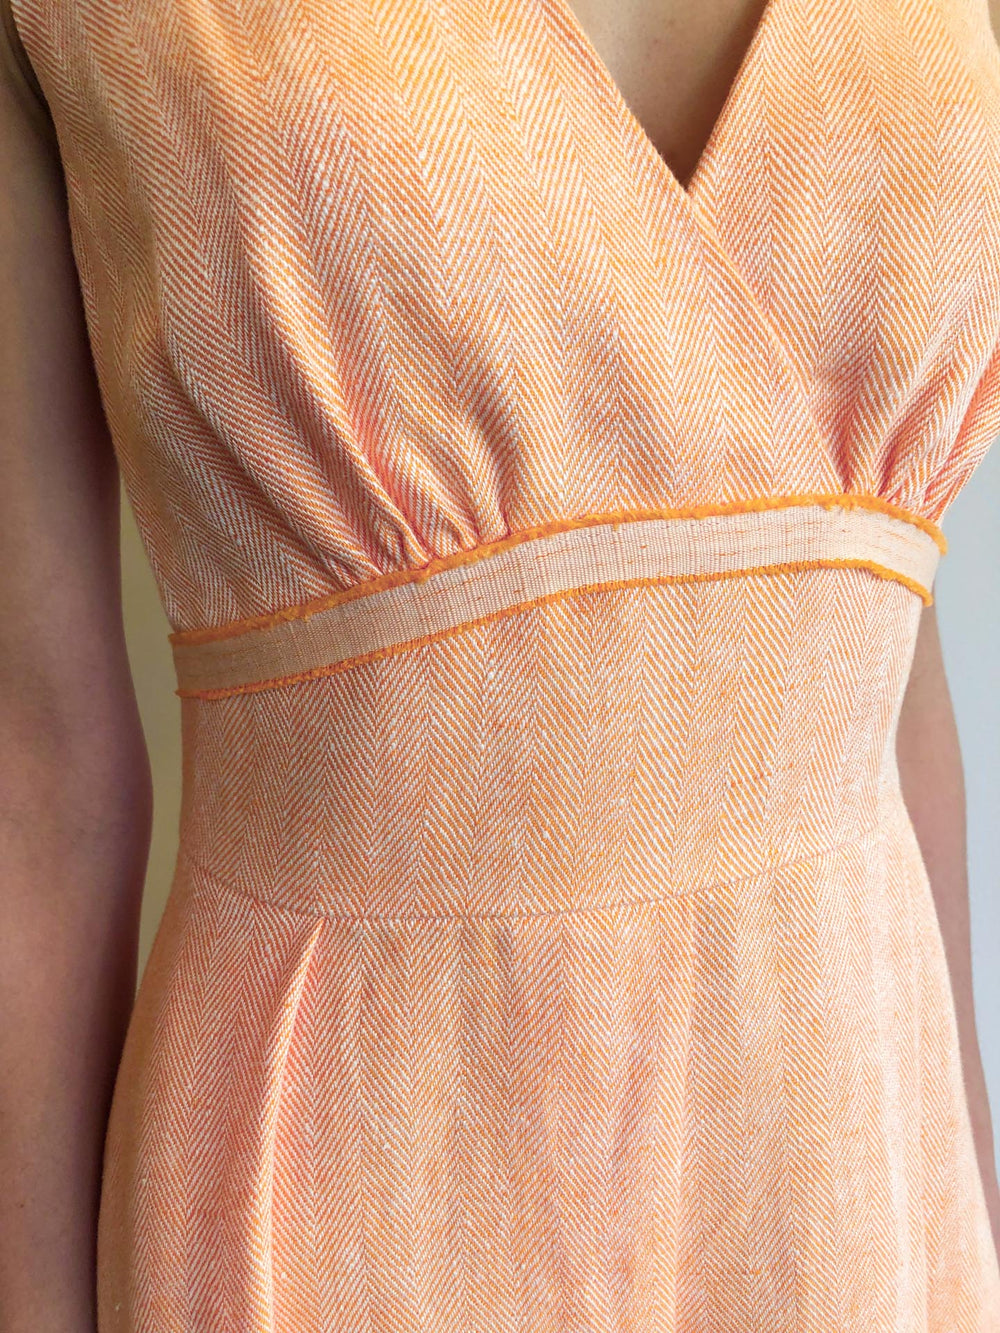 Fashion Designer CARL KAPP collection | Vallon A-line v neck cocktail linen dress orange | Sydney Australia